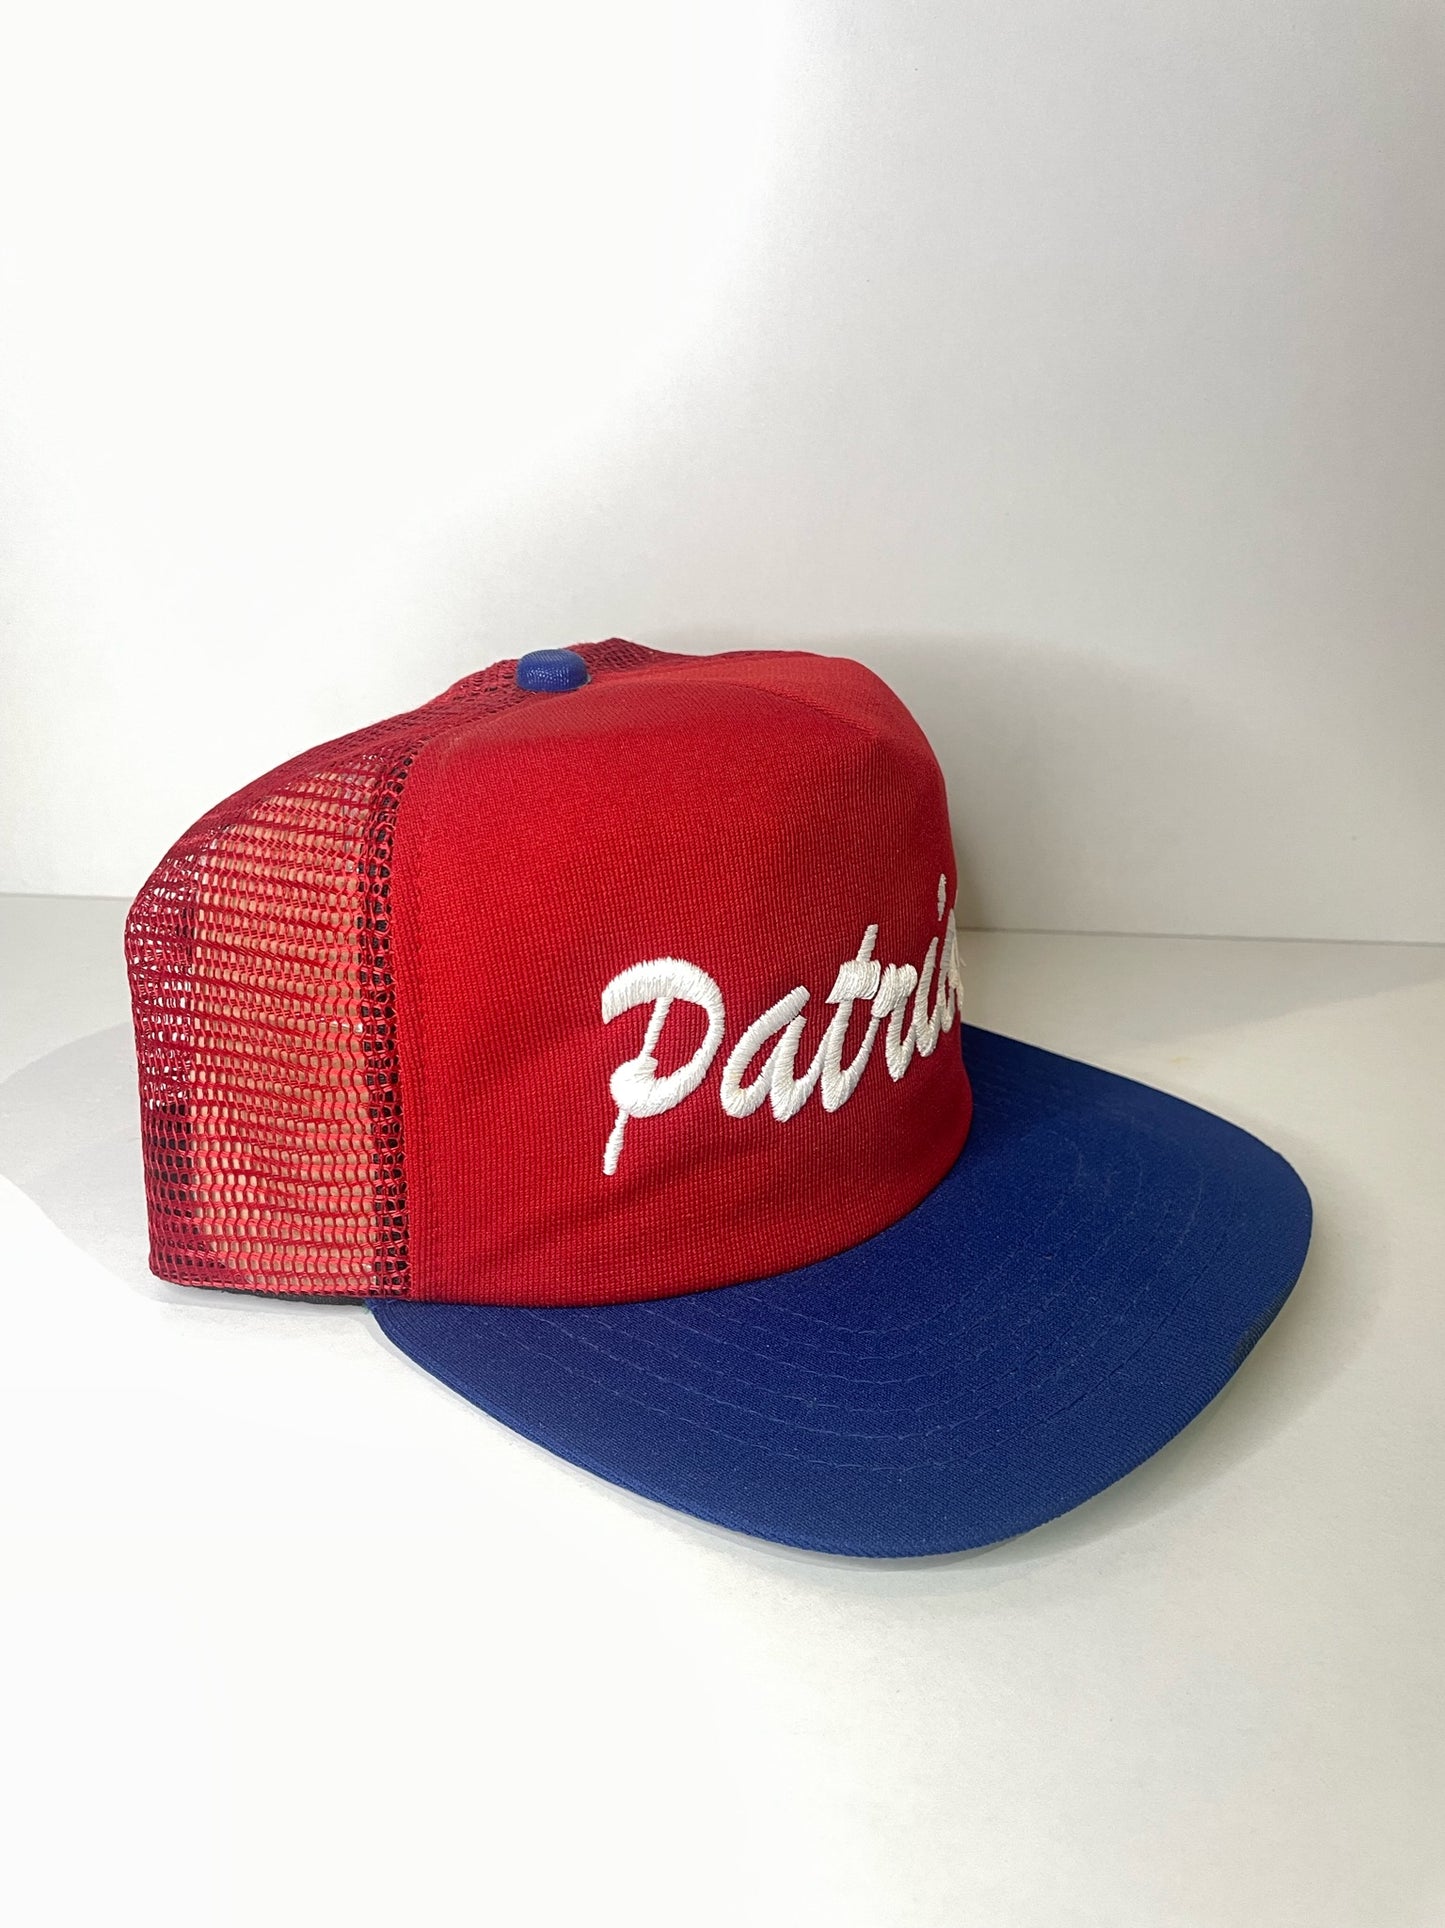 VINTAGE 80s NEW ENGLAND PATRIOTS NEW ERA TRUCKER CAP HAT